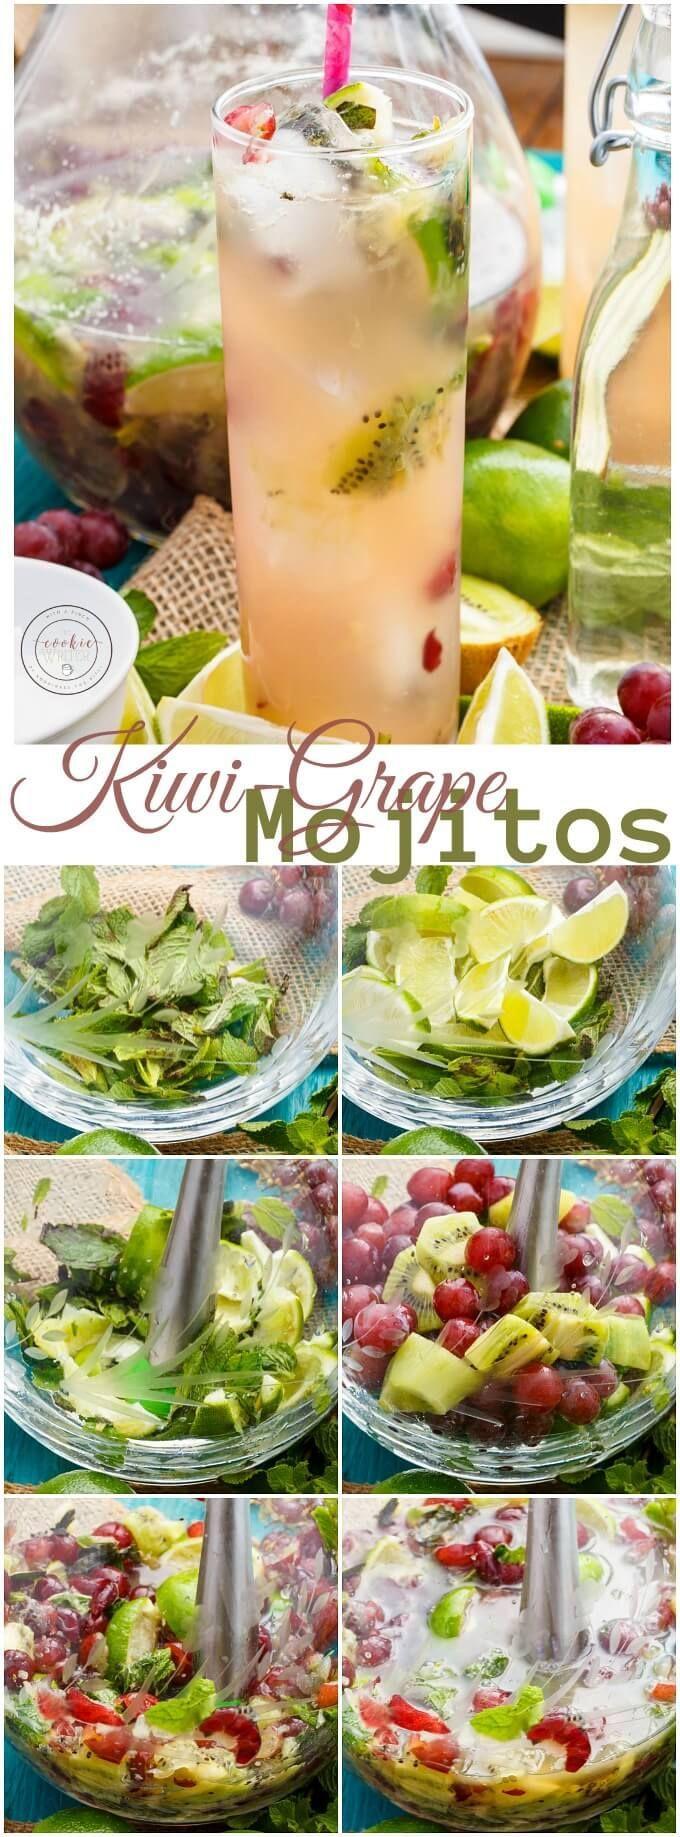 Hochzeit - Fresh Kiwi-Grape Mojitos